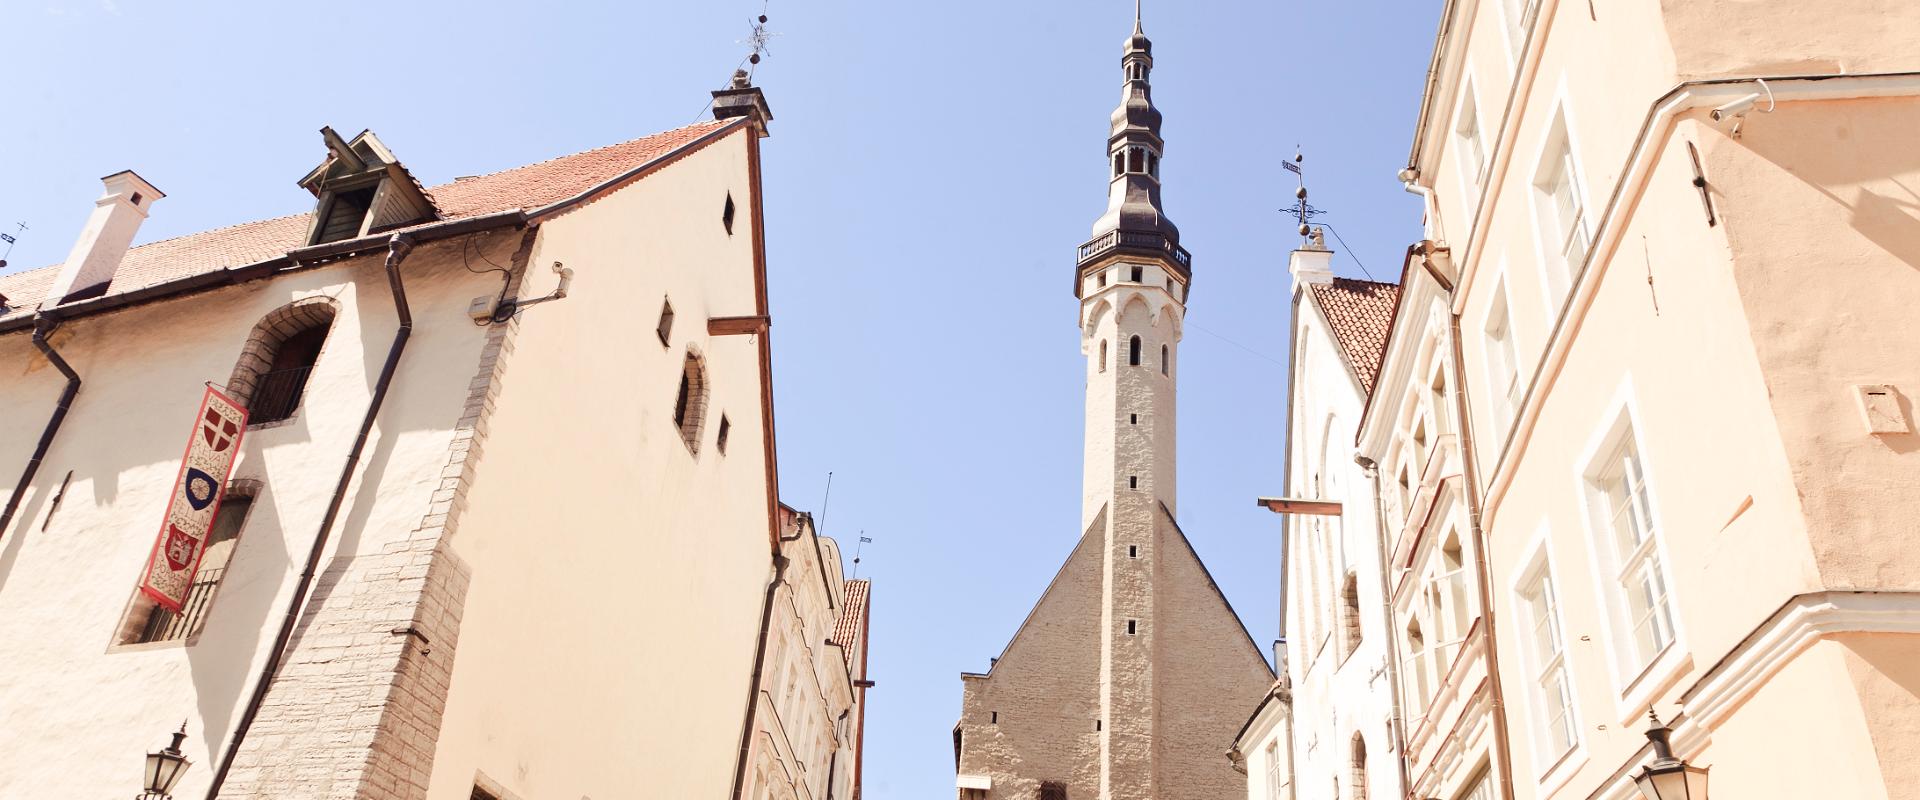 Guided walk in Tallinn’s Old Town